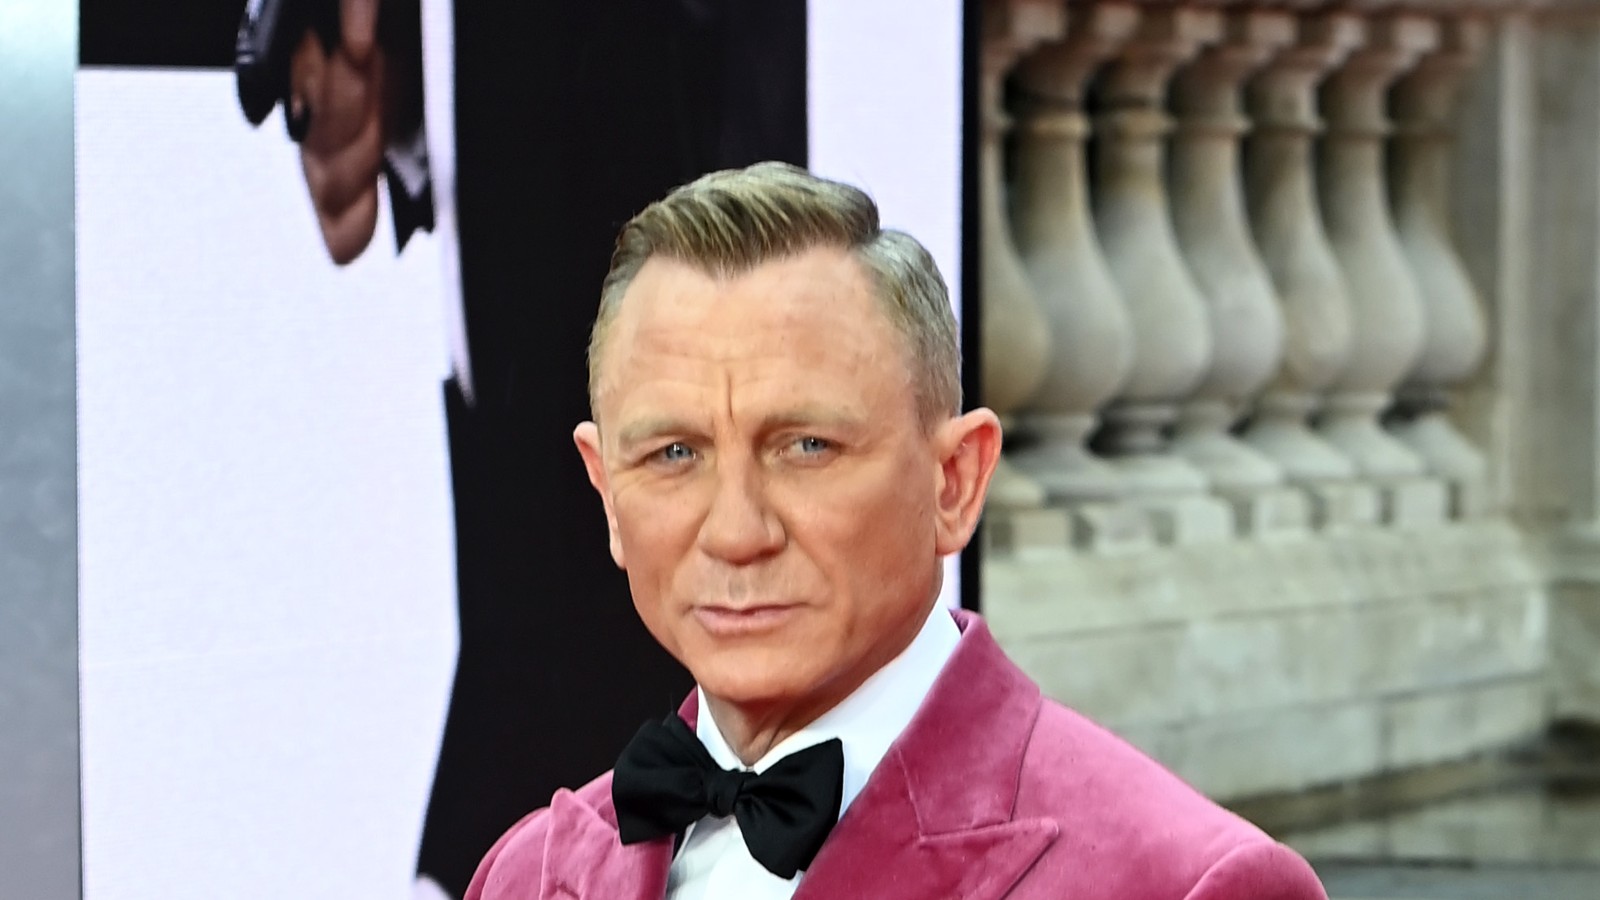 Daniel Craig No Time To Die Premiere  Man For Himself